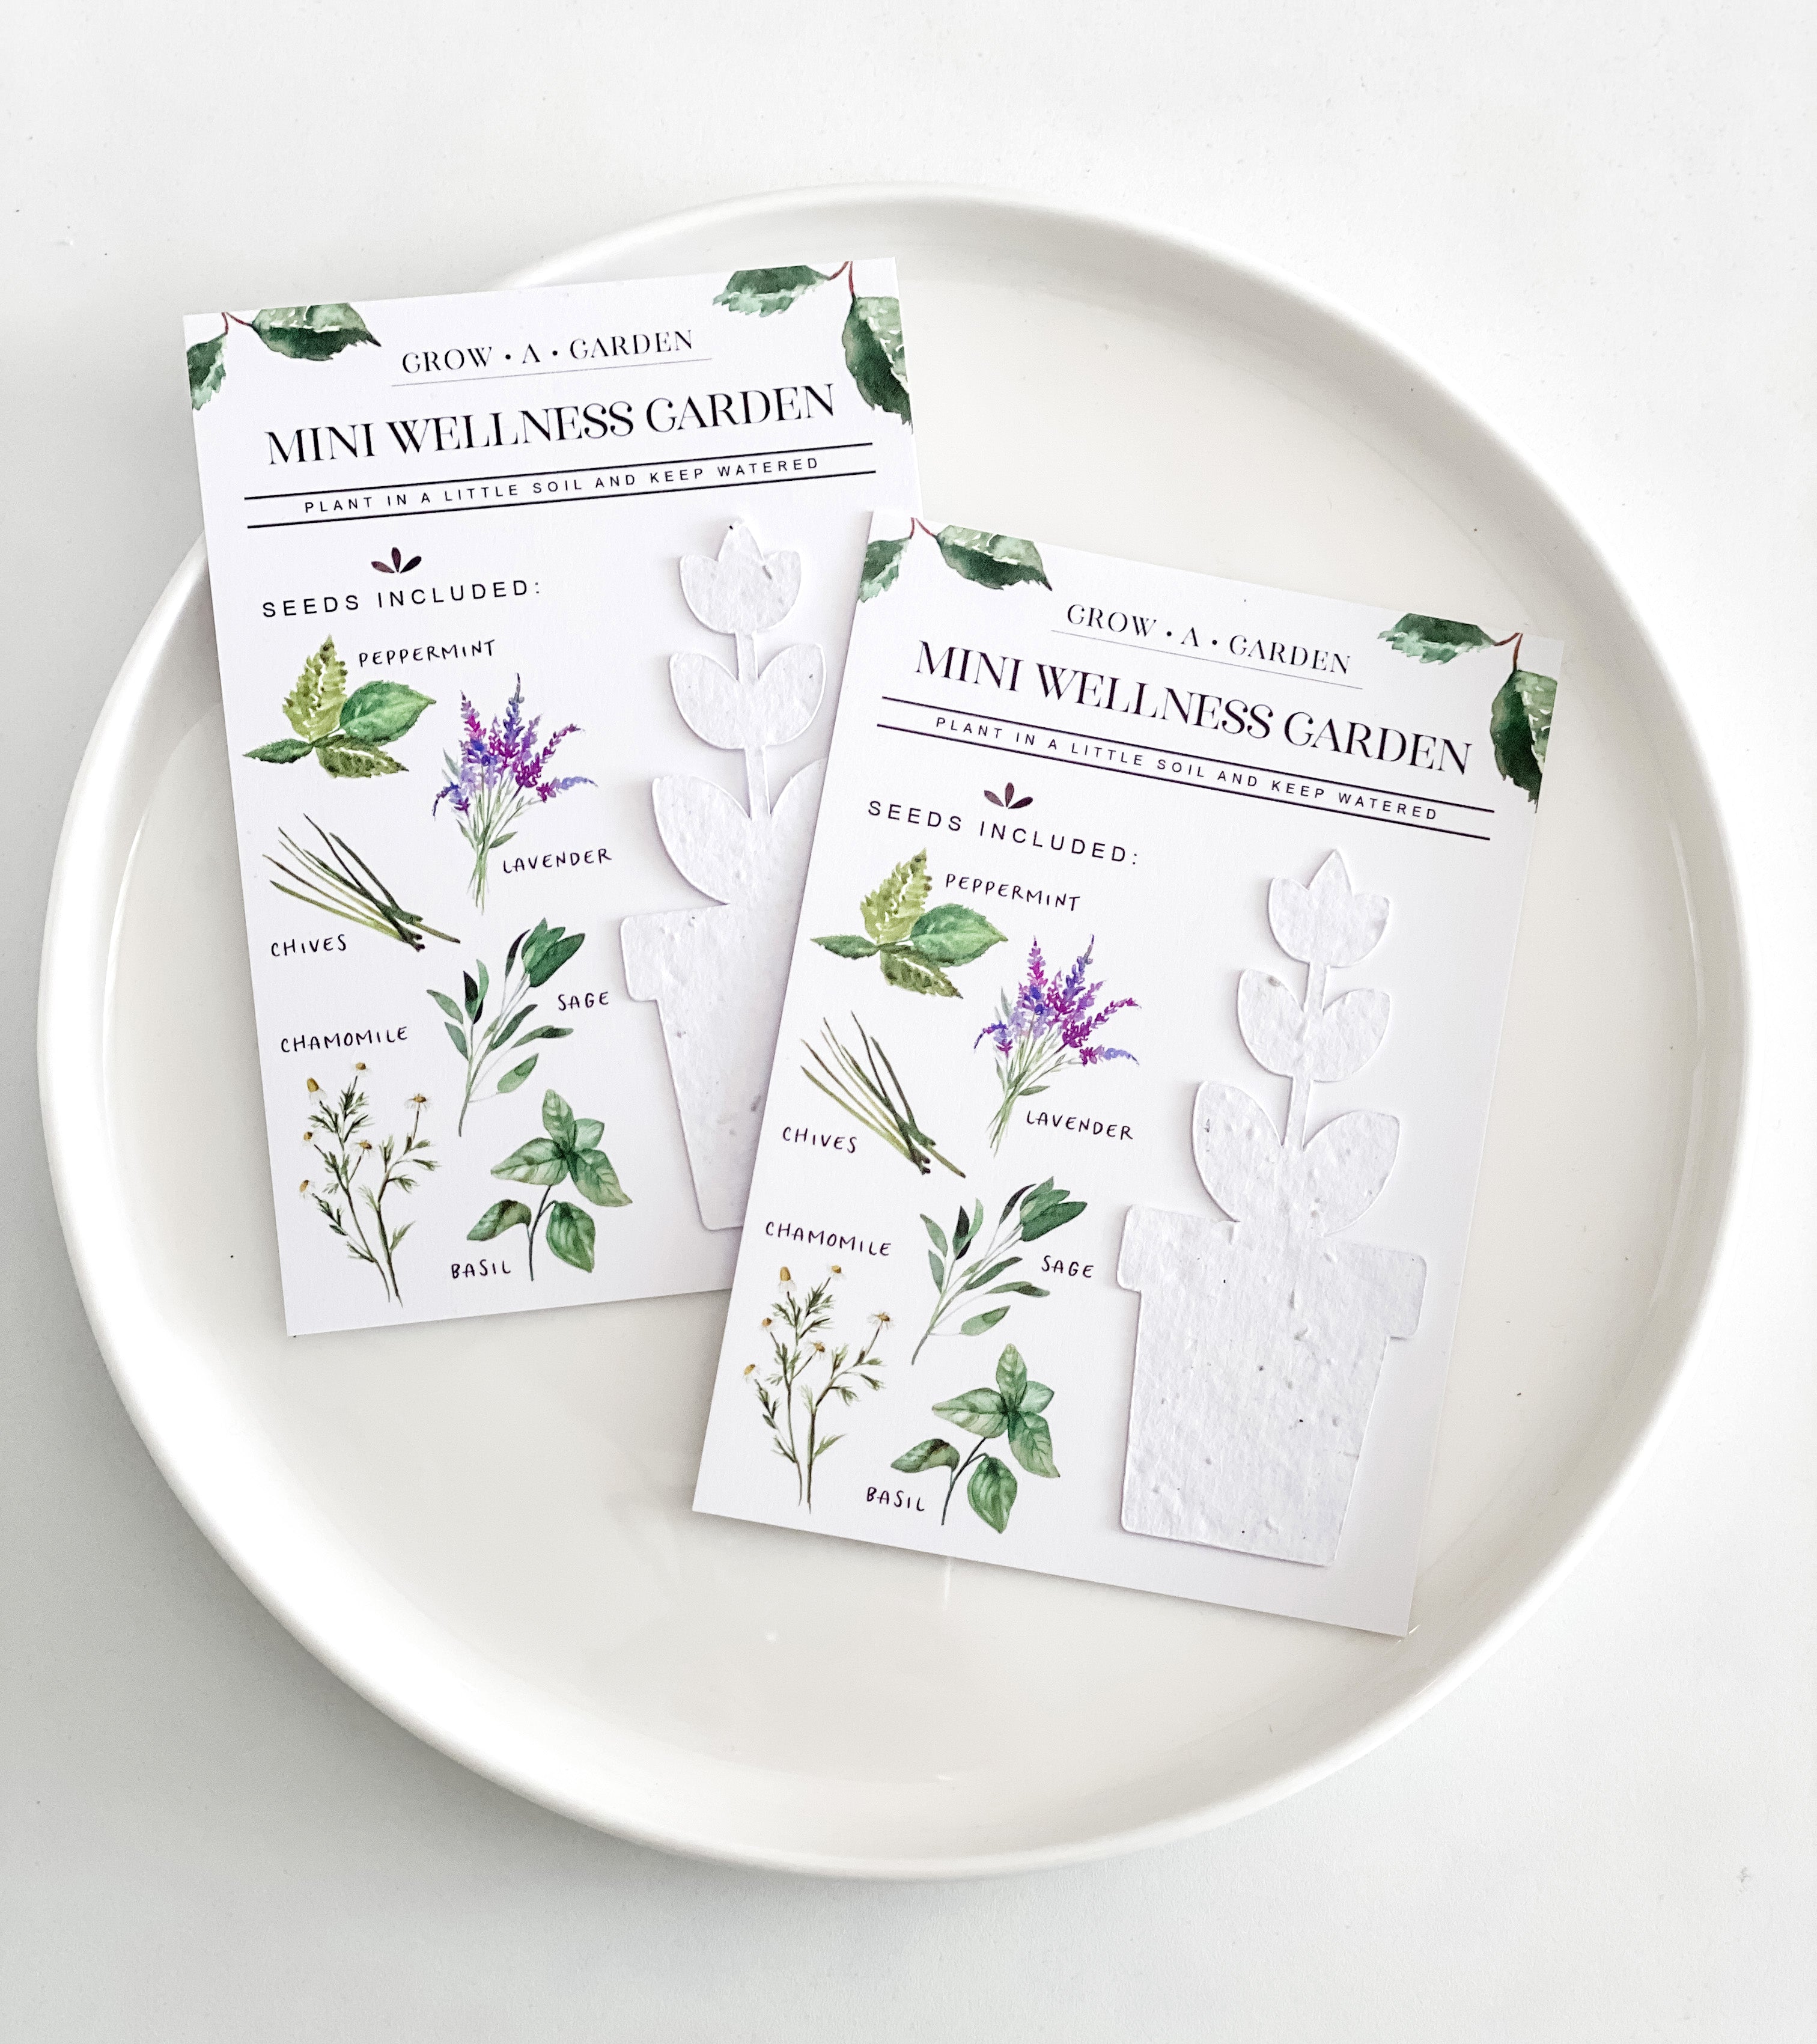 growNOTES™ Grow-A-Garden Mini Wellness Garden Kits